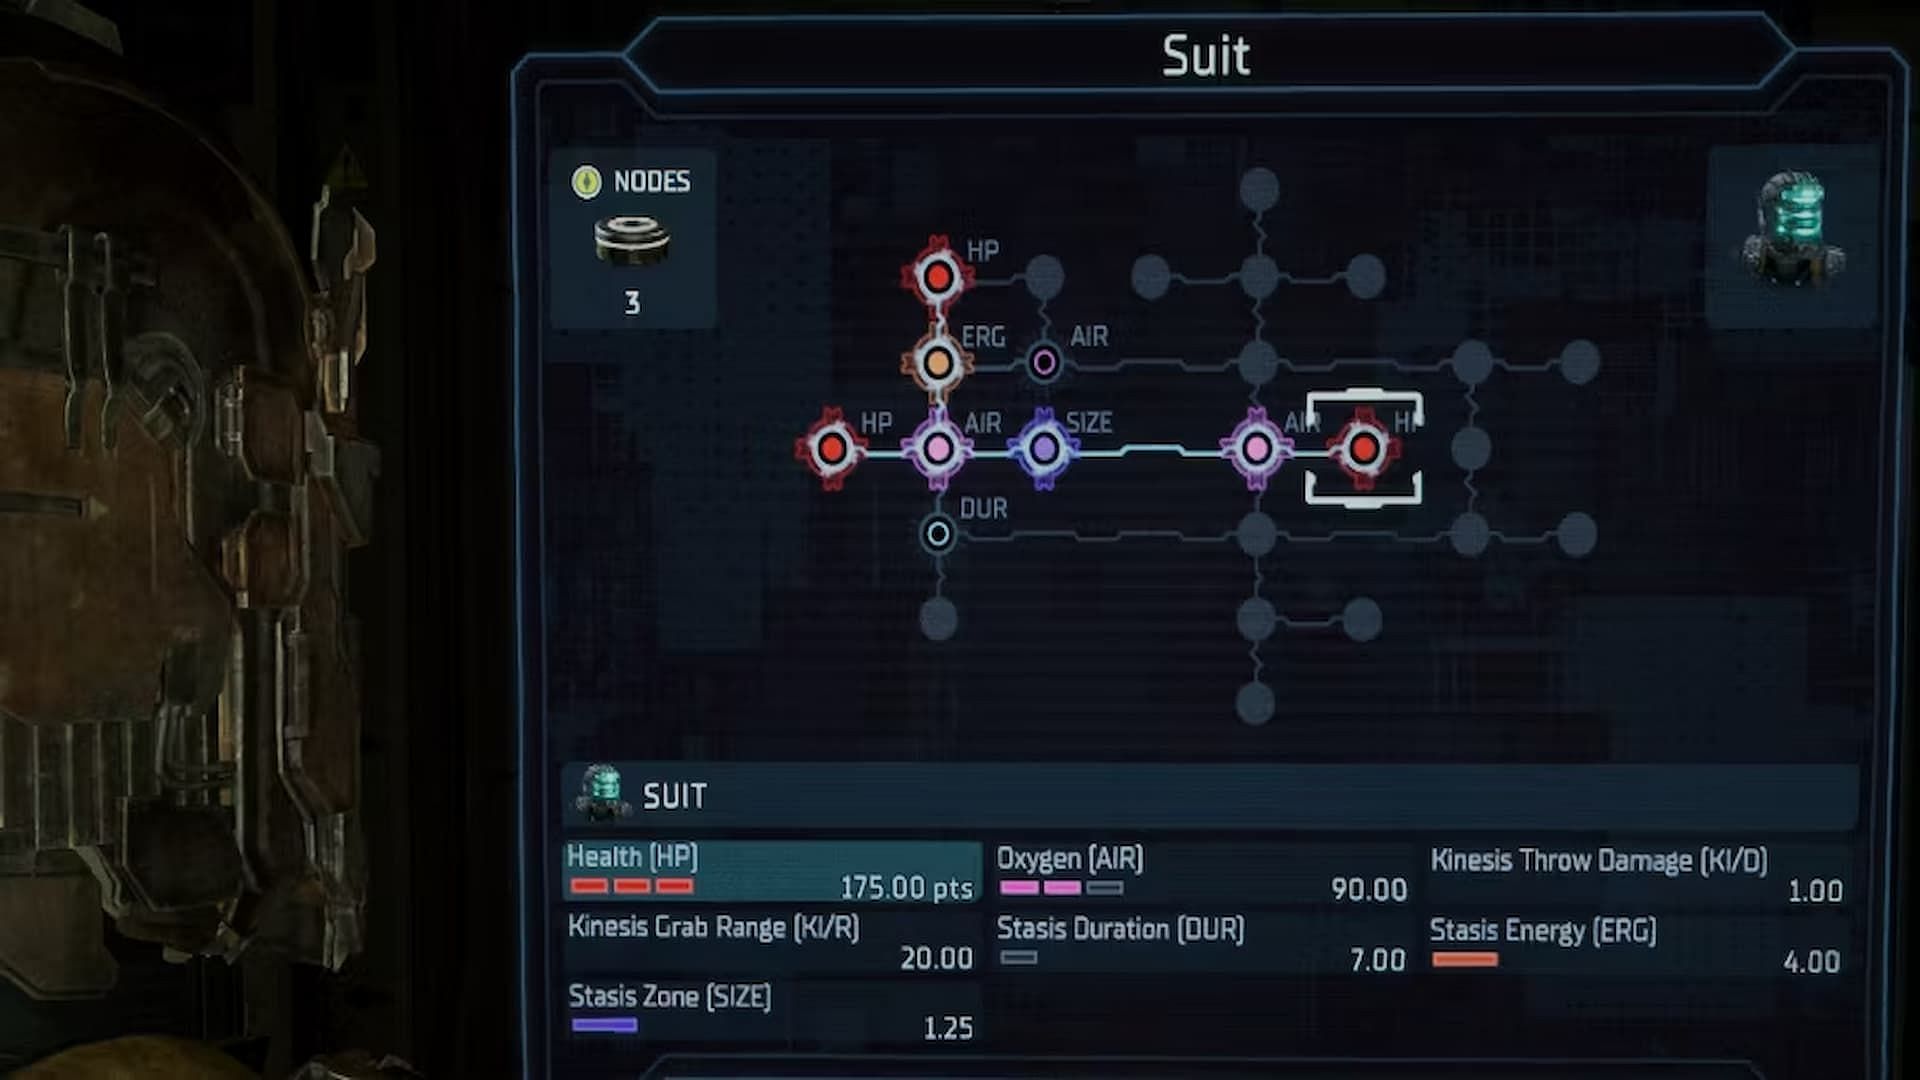 Dead Space suit upgrades explained